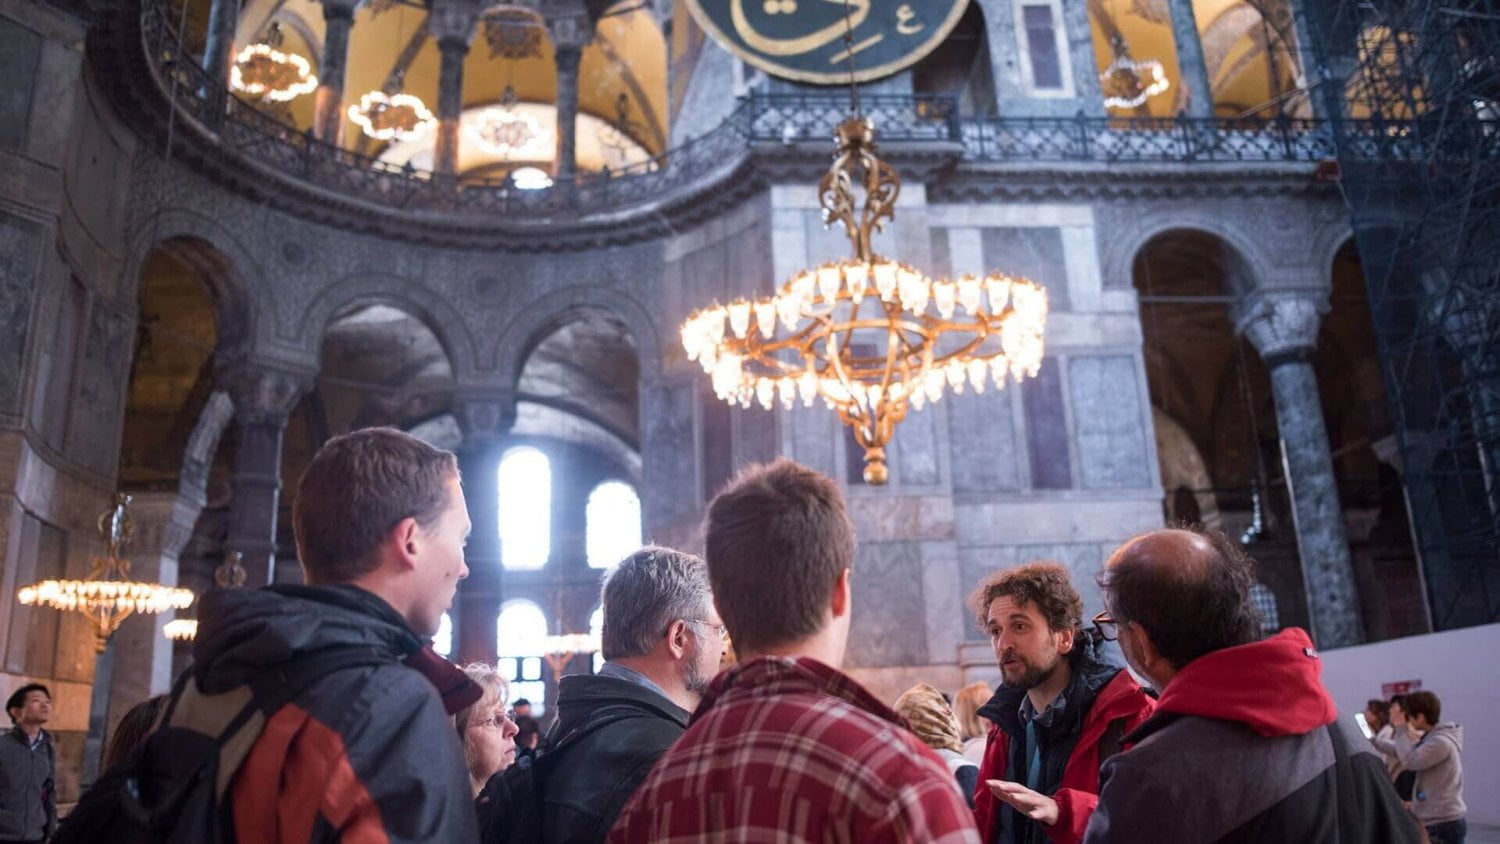 Hagia Sophia Grand Mosque (Ayasofya 2022 Guide with Insider Advice)